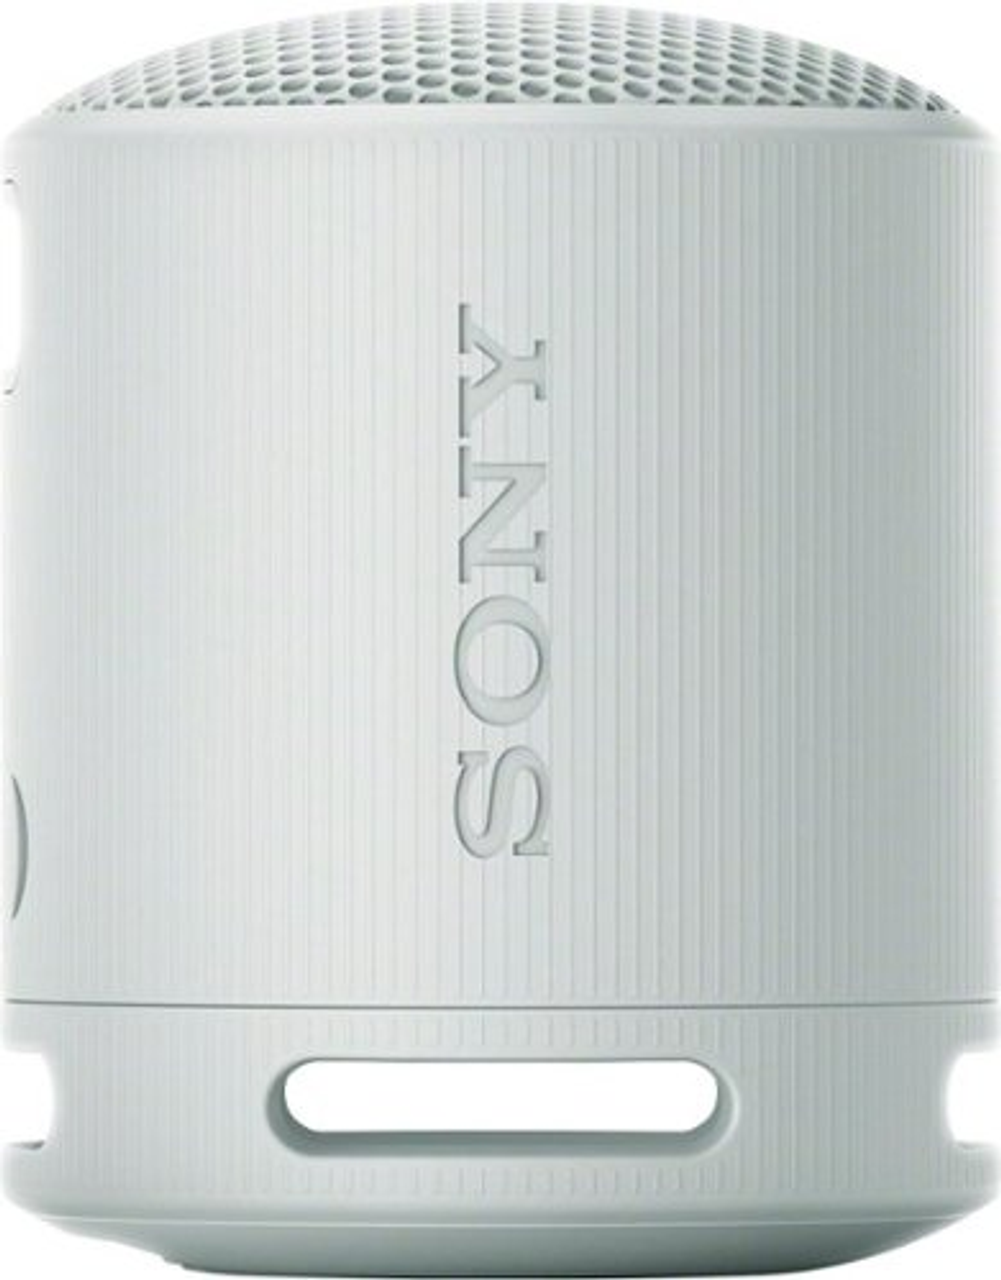 Sony - XB100/H Compact Bluetooth Speaker - Light Gray